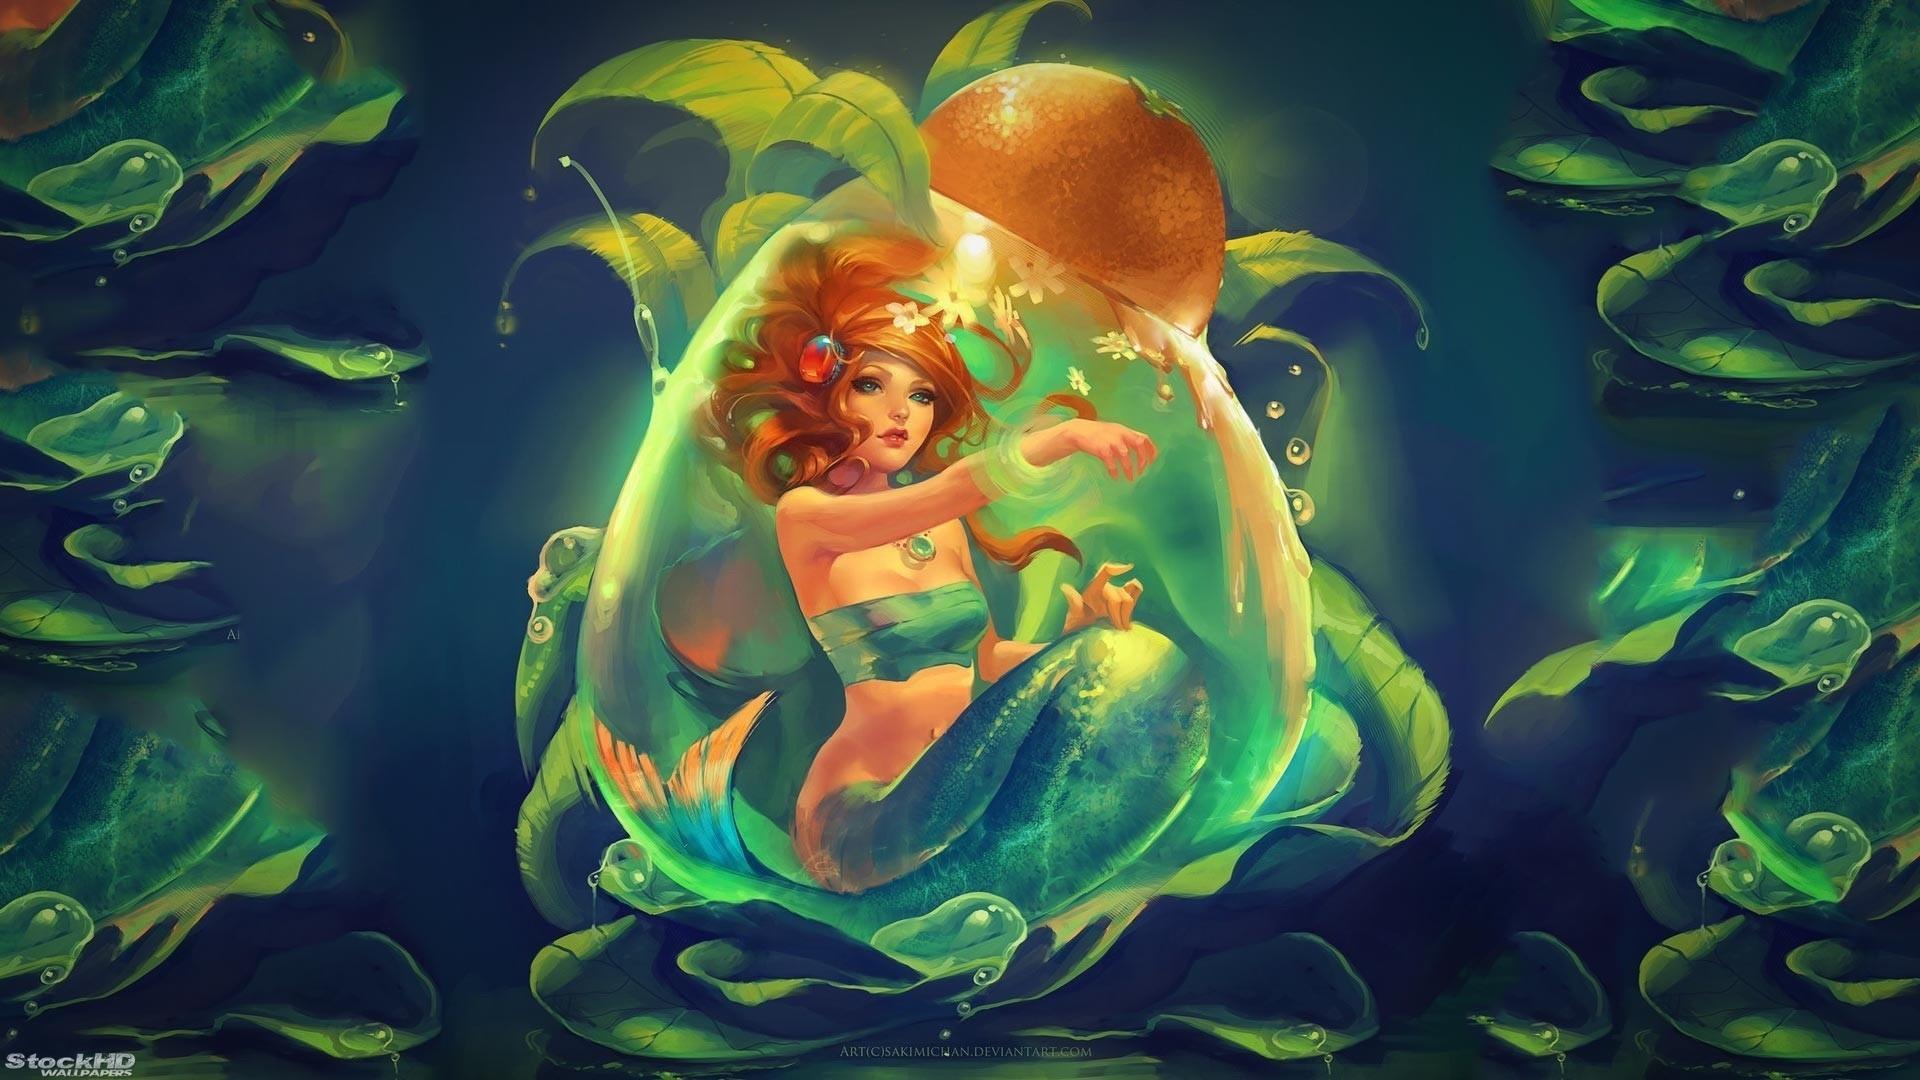 Fantasy Mermaid Wallpaper Image & Picture